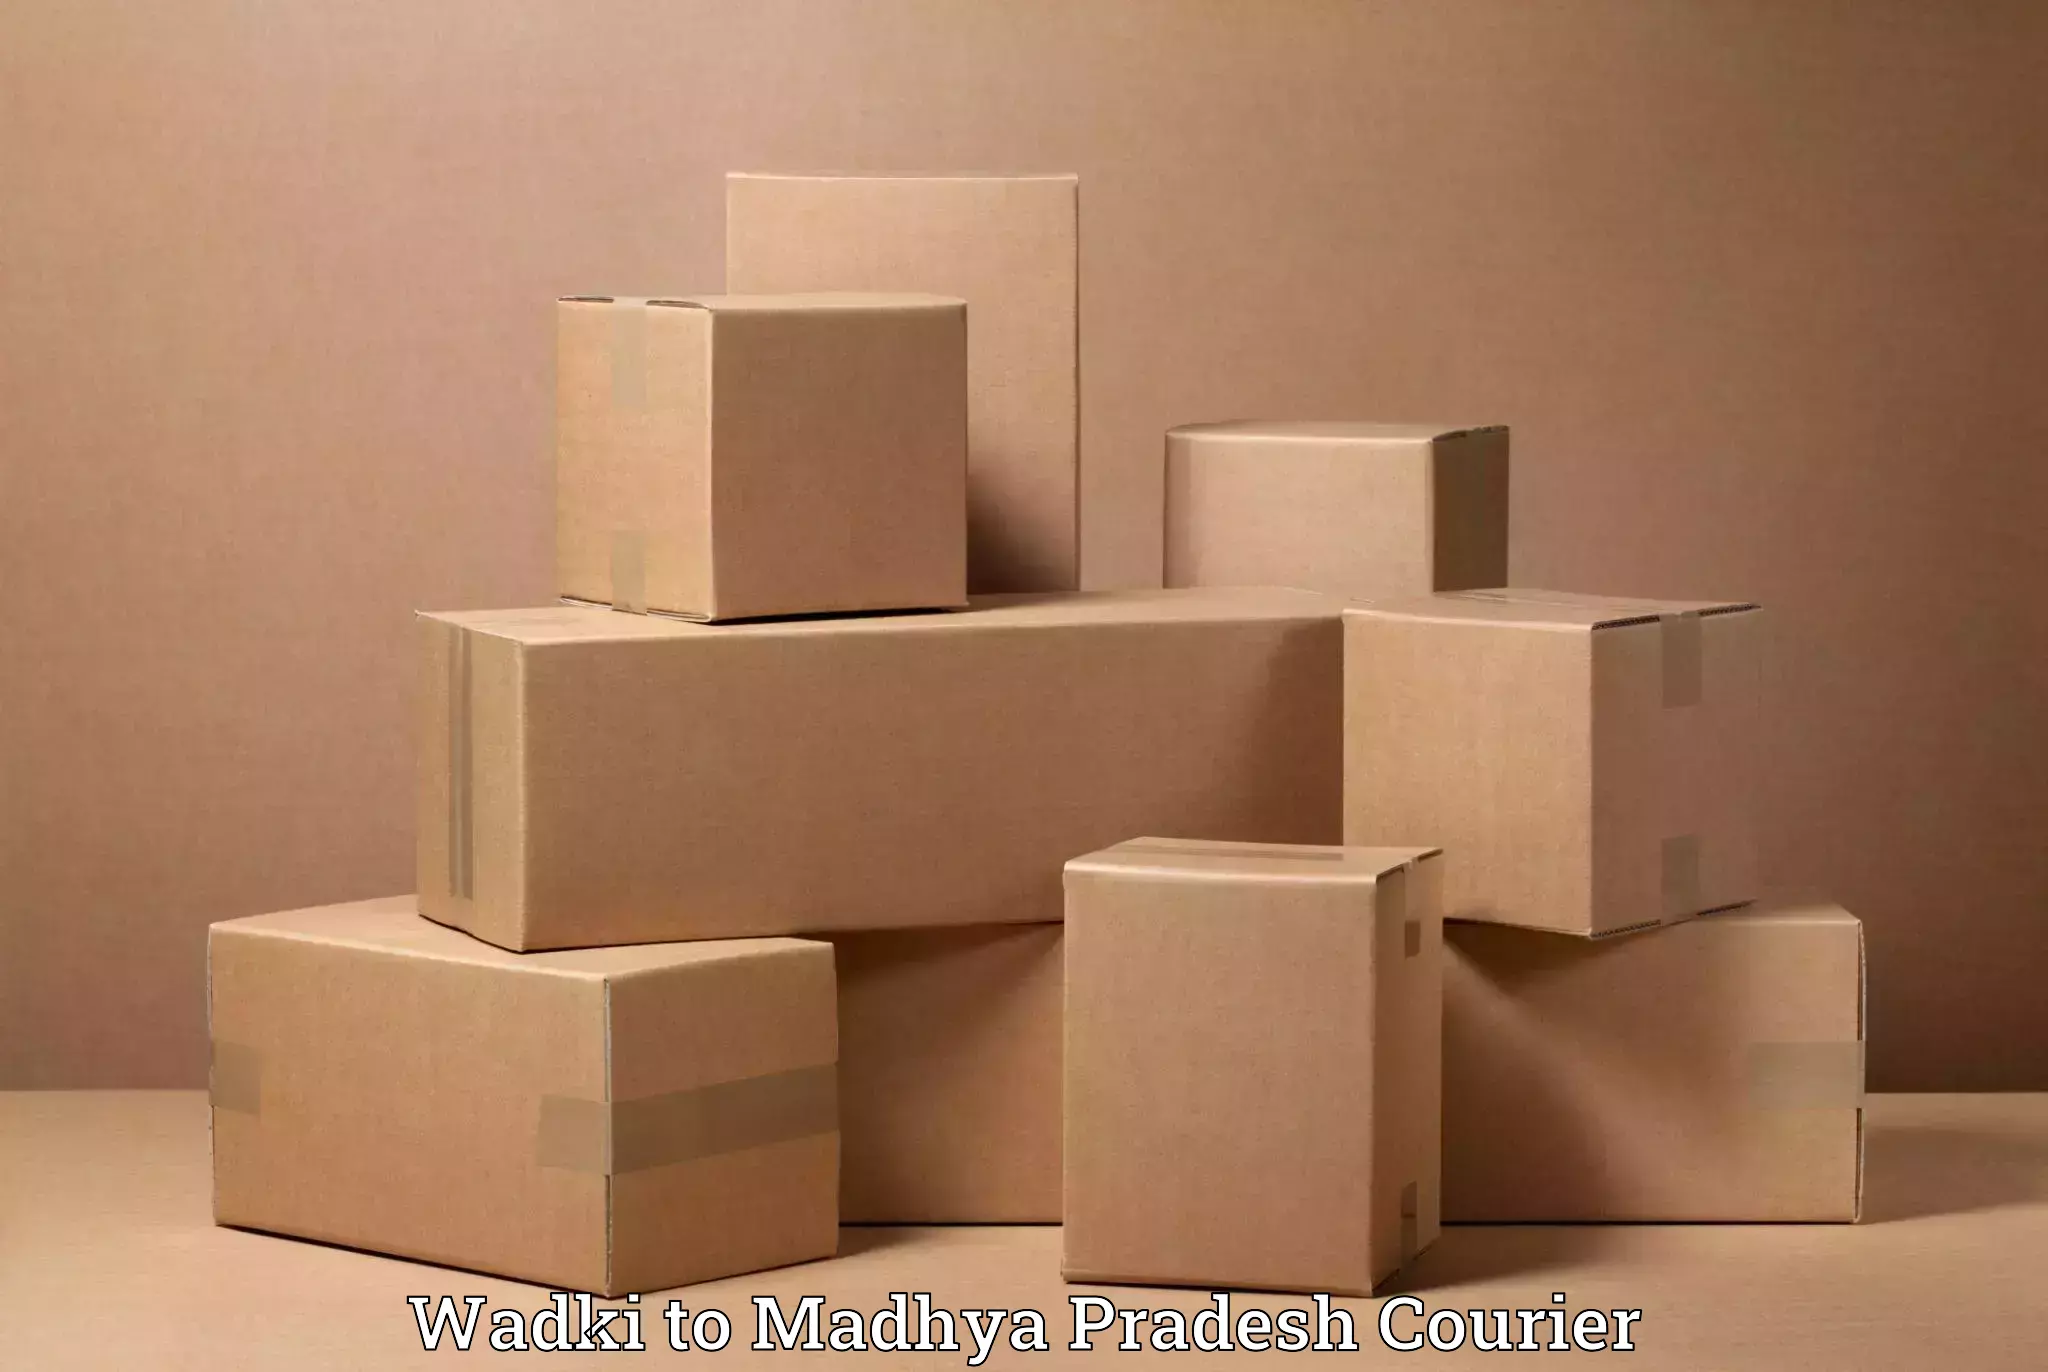 Budget-friendly movers Wadki to Madhya Pradesh